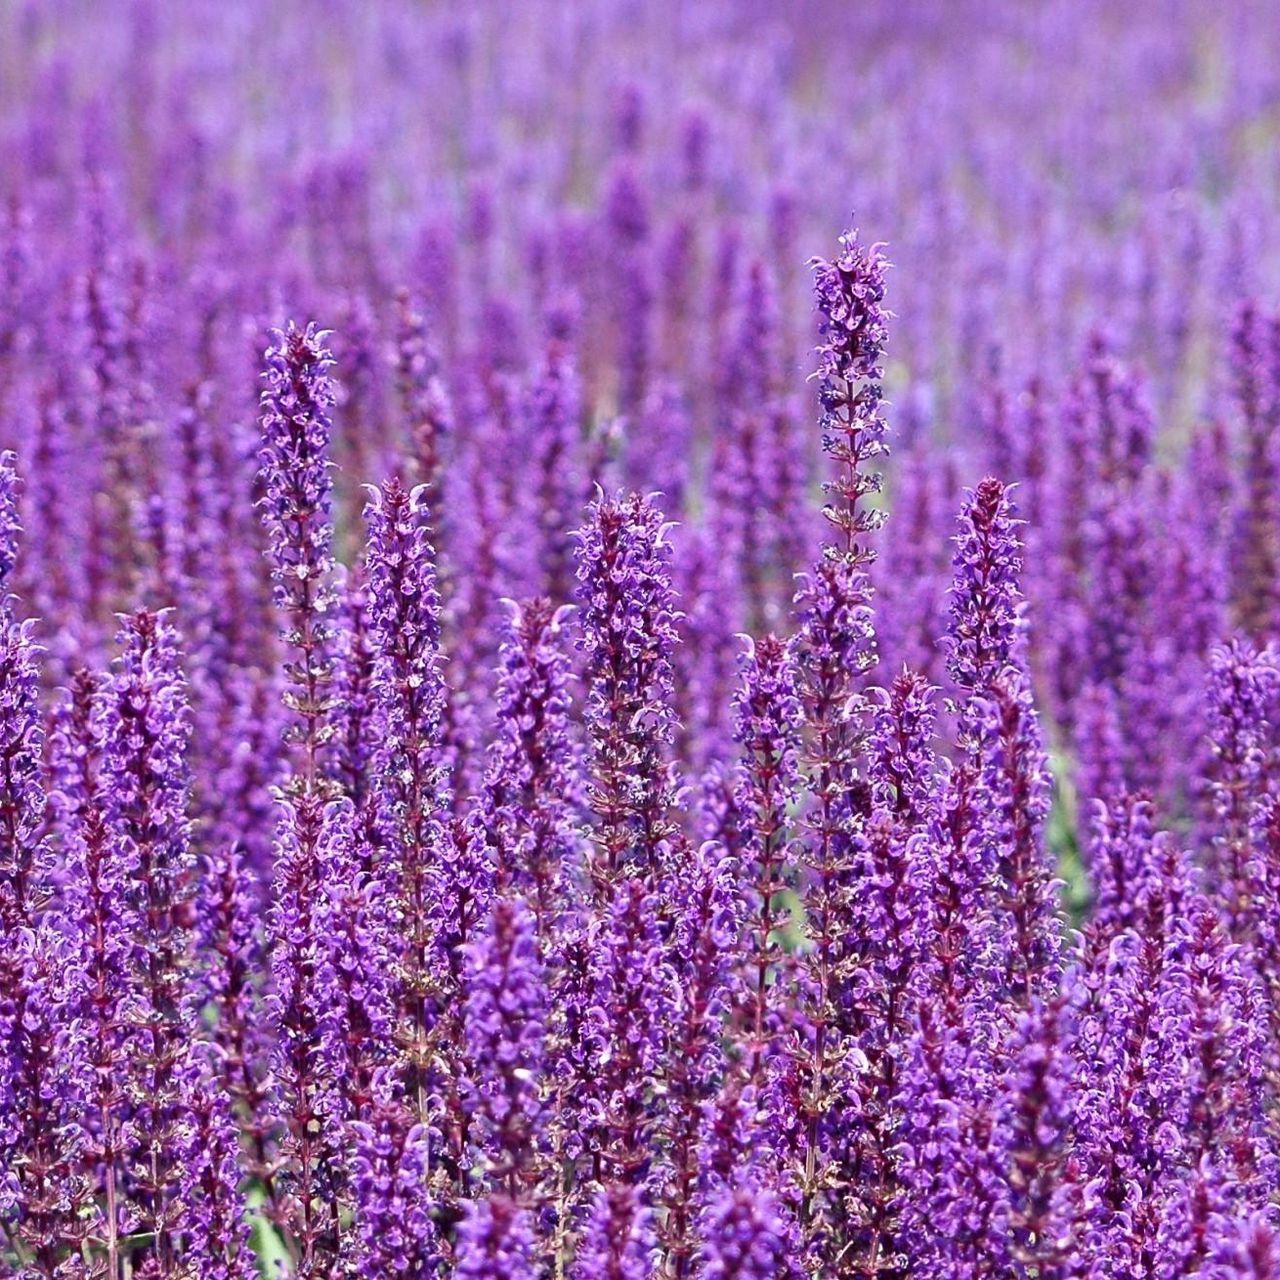 Download wallpaper 1280x1280 flowers, purple, field, many ipad